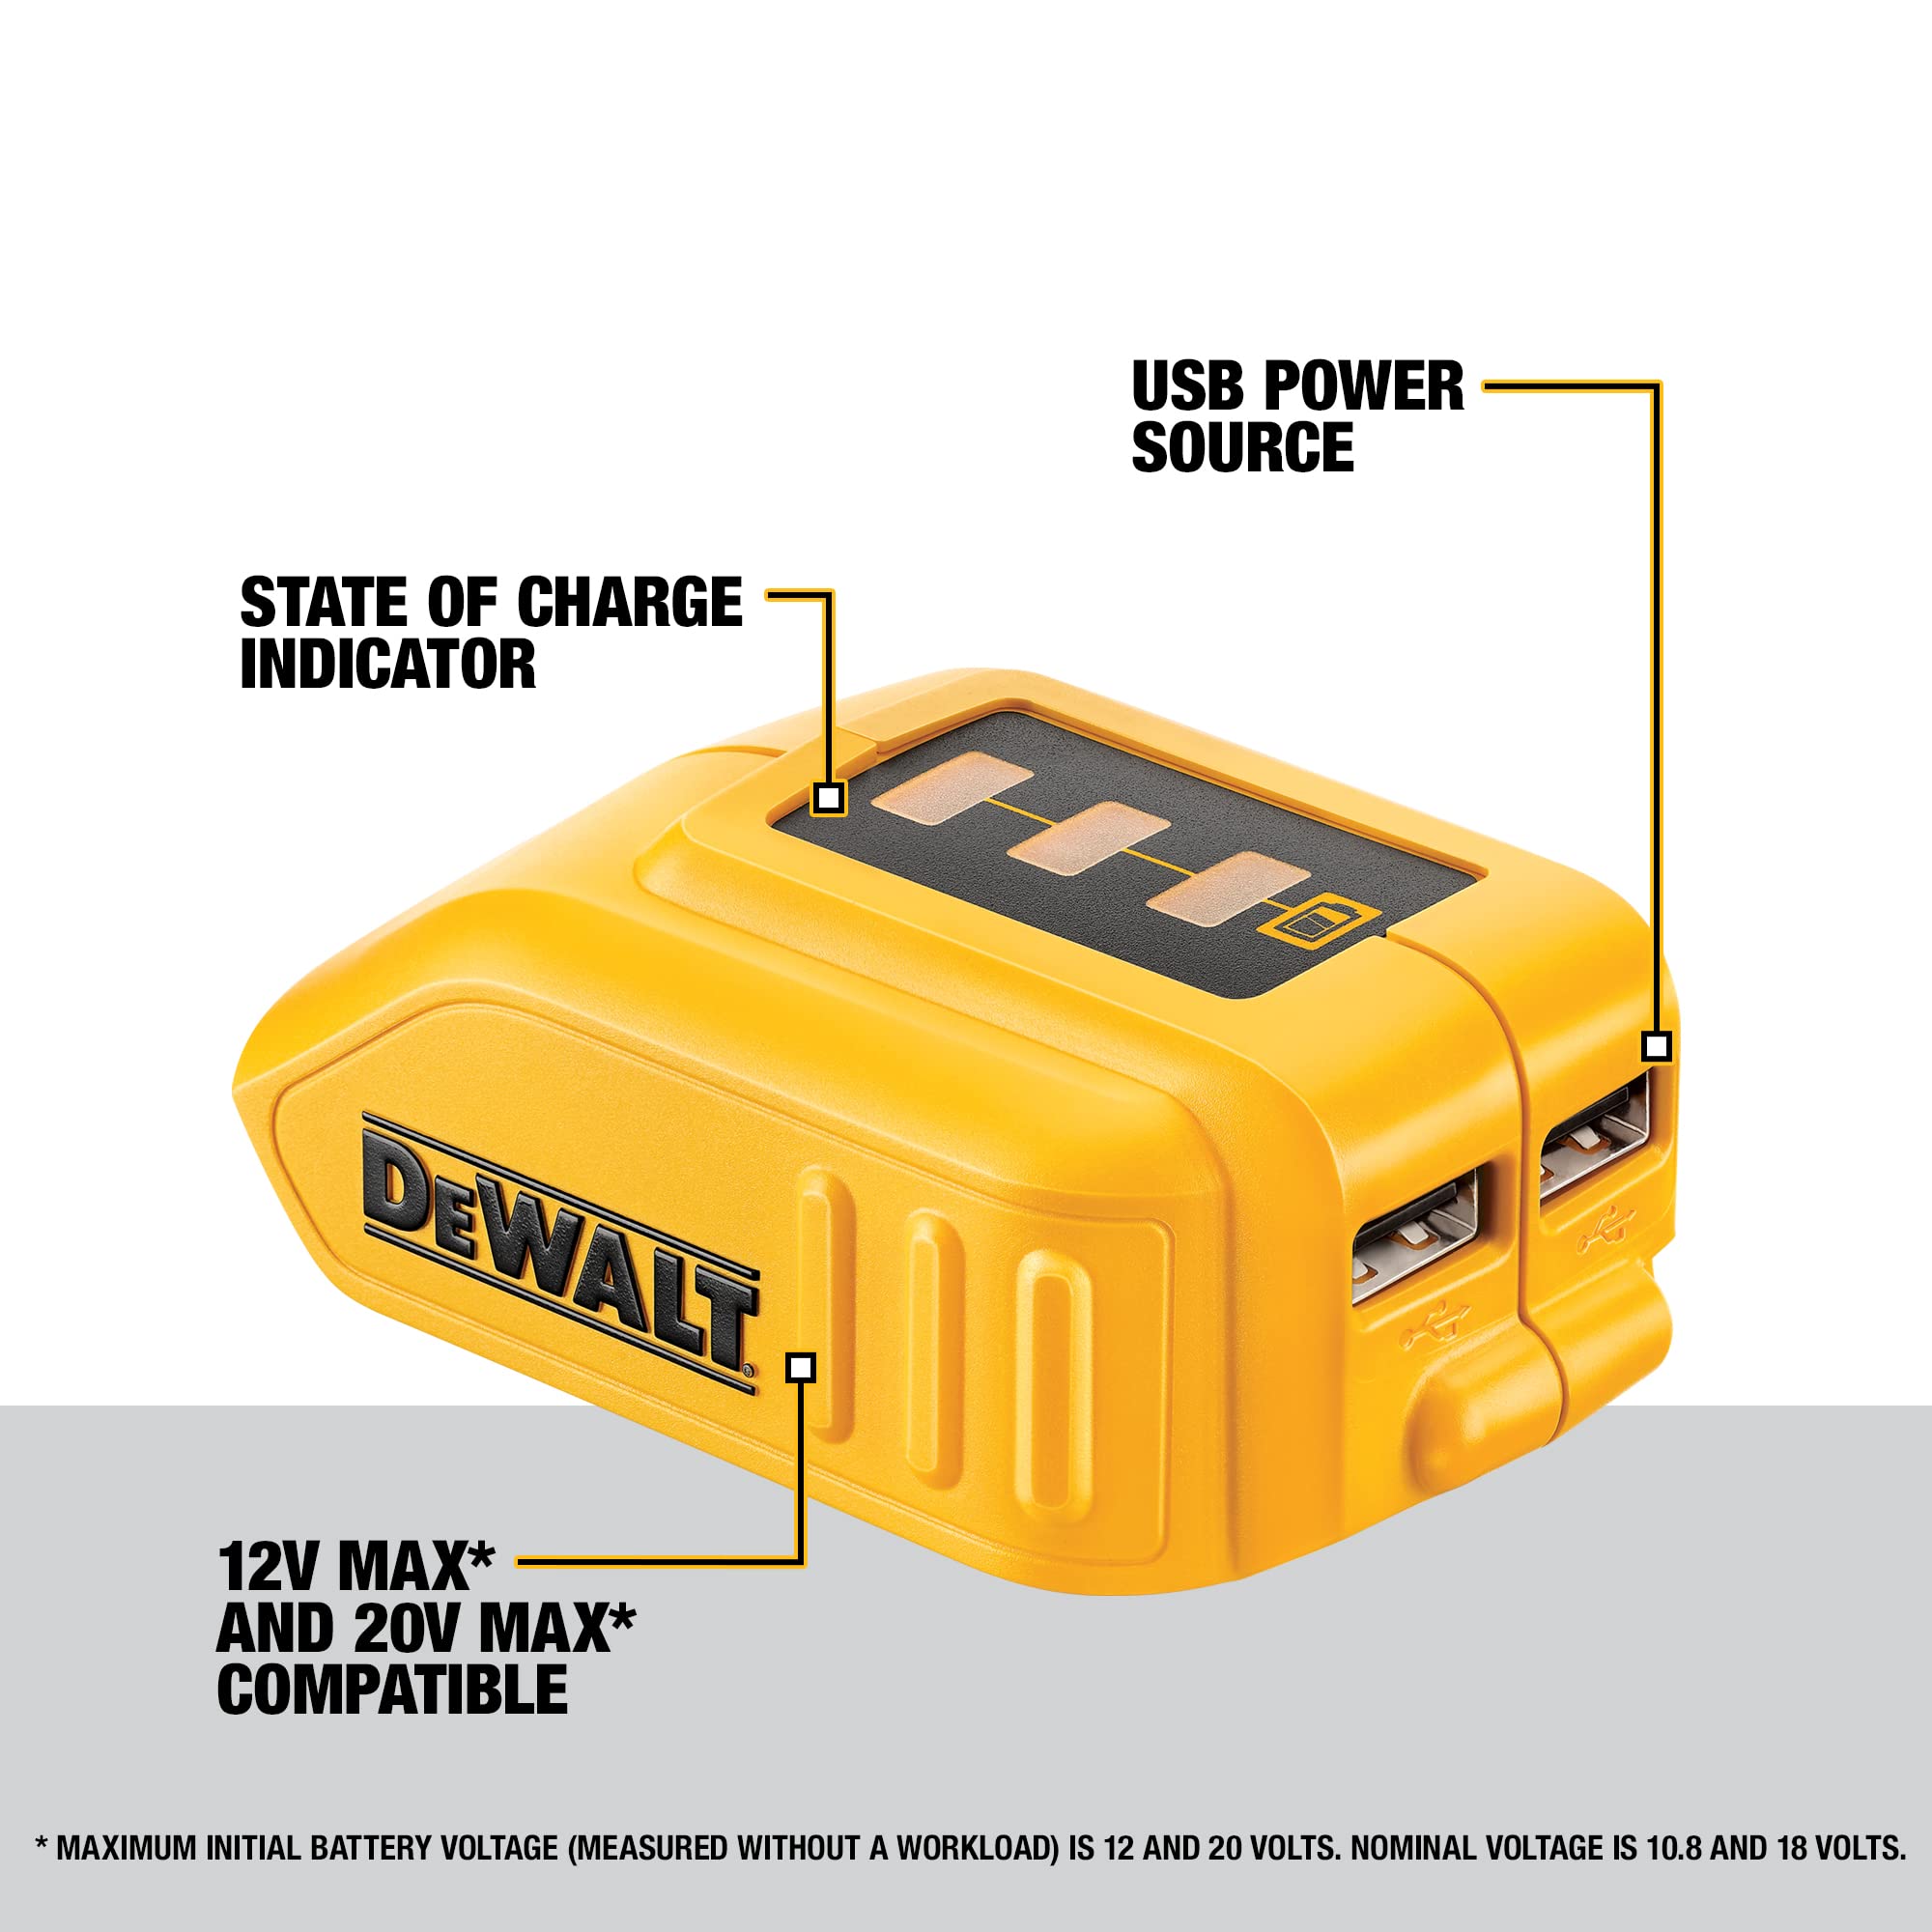 DEWALT 12V/20V MAX* USB Charger, Tool Only (DCB090),Yellow